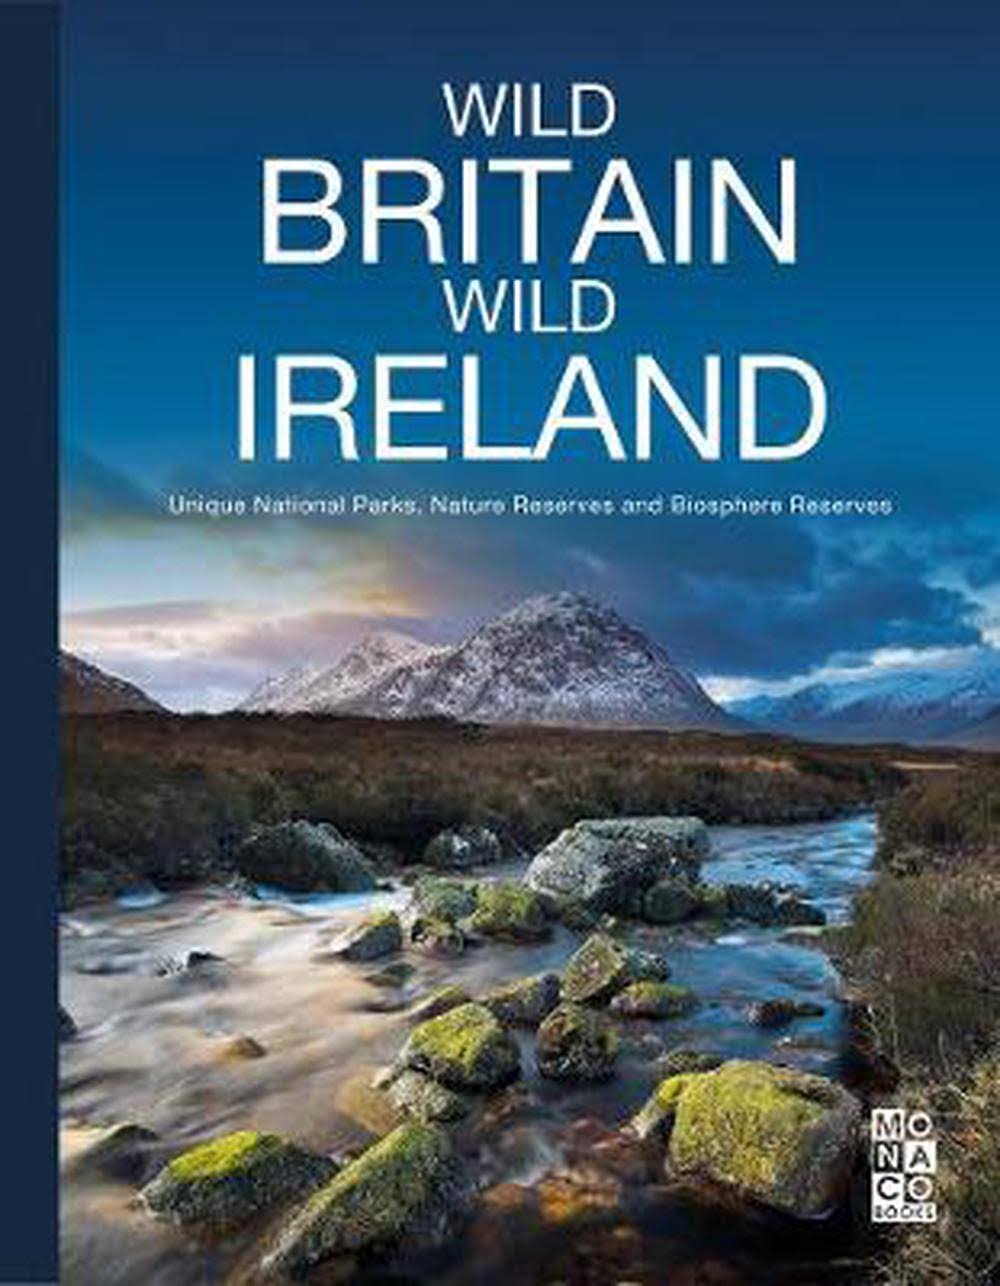 Wild Britain - Wild Ireland by Monaco Books